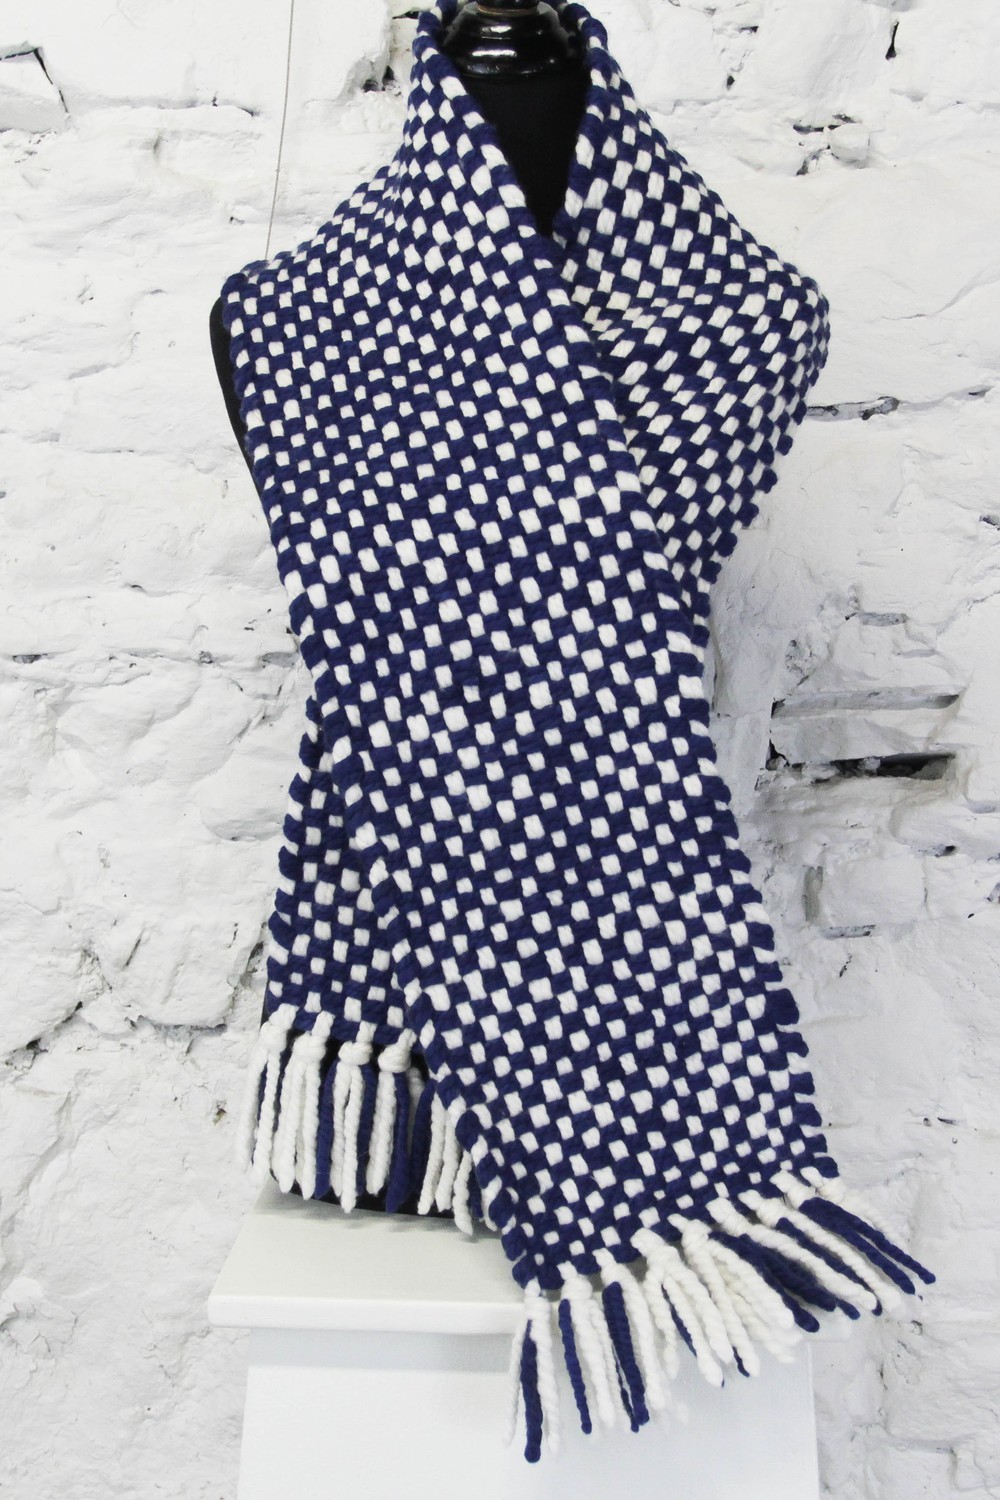 Blue & white merino basketweave, wool